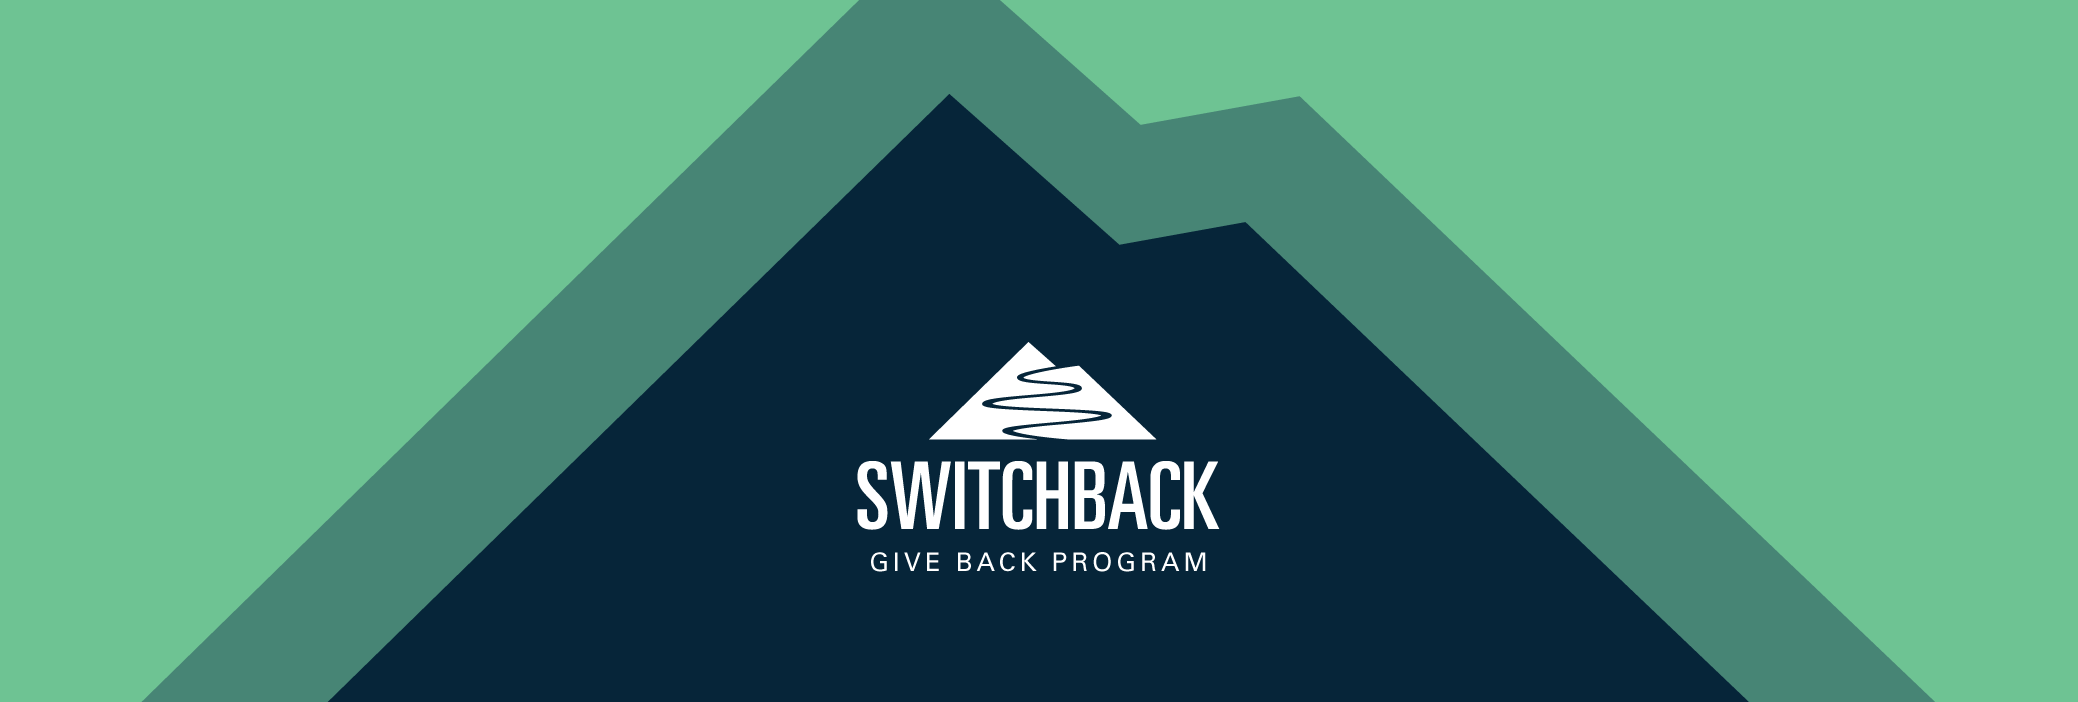 Switchback - Singlespeed brewing give back program